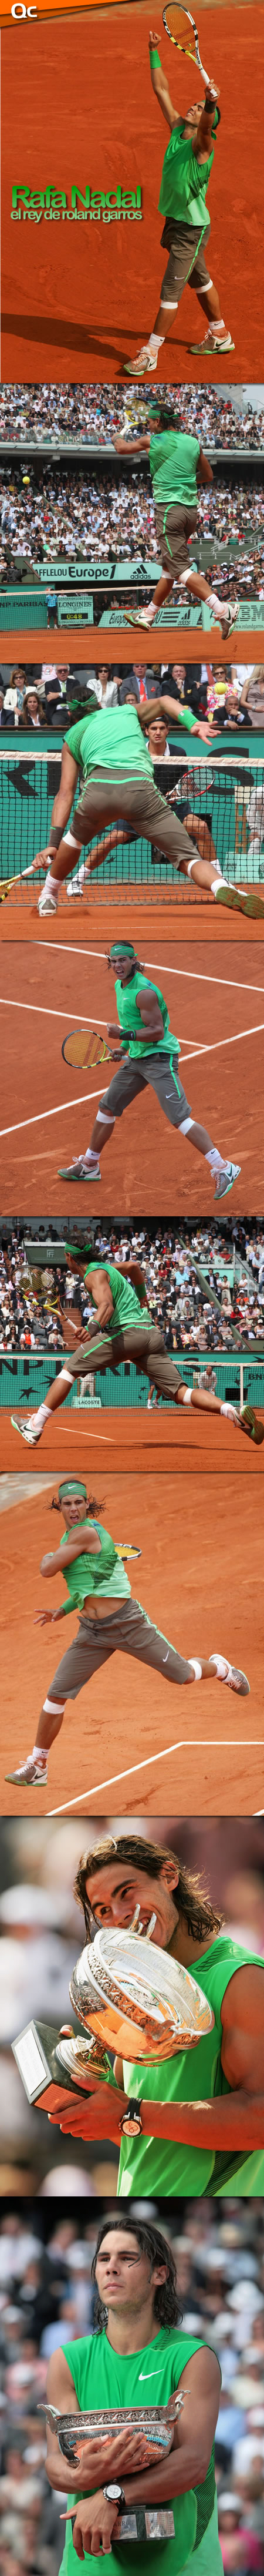 Rafa Nadal Celebra su Cuarto Roland Garros